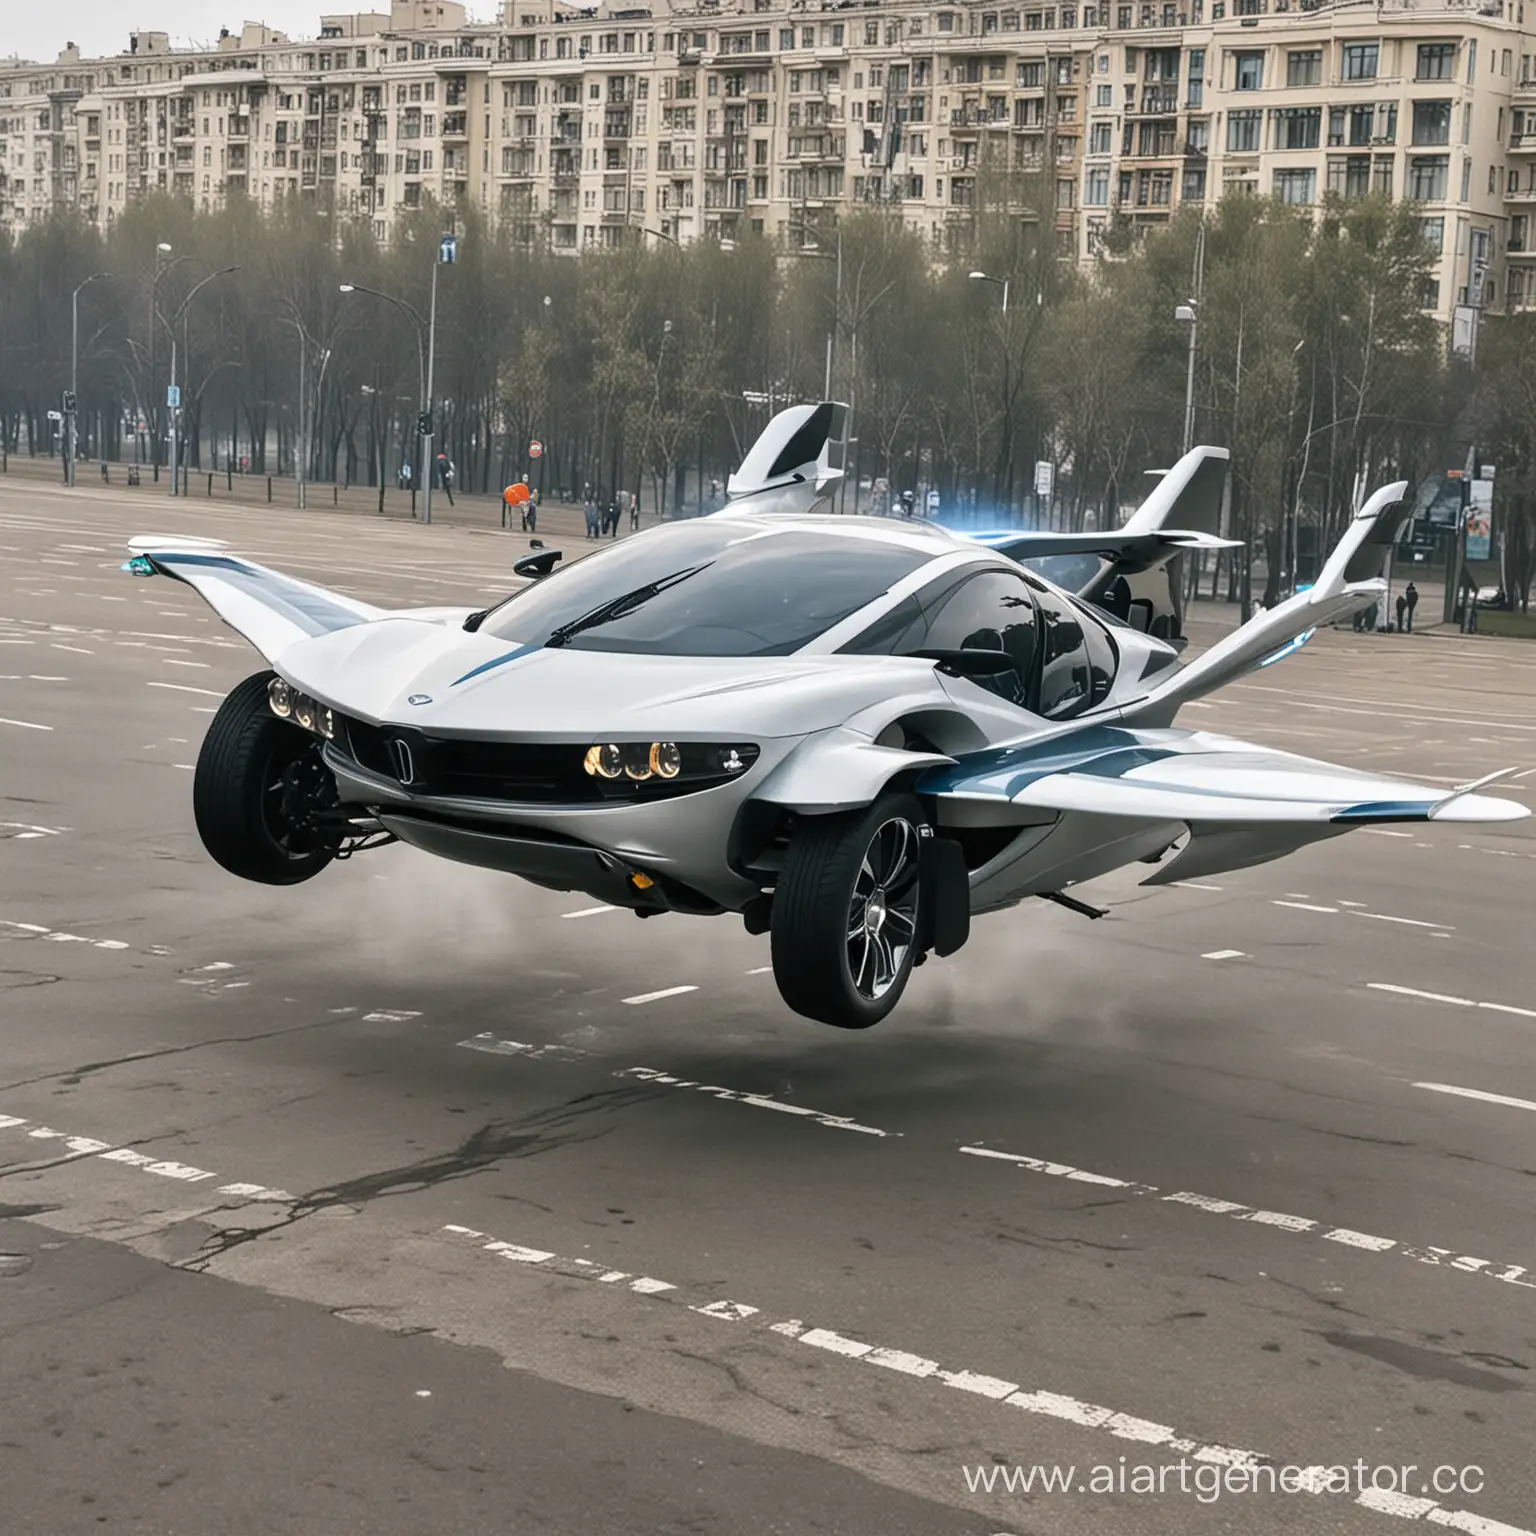 Futuristic-Flying-Car-Over-Moscow-Skyline